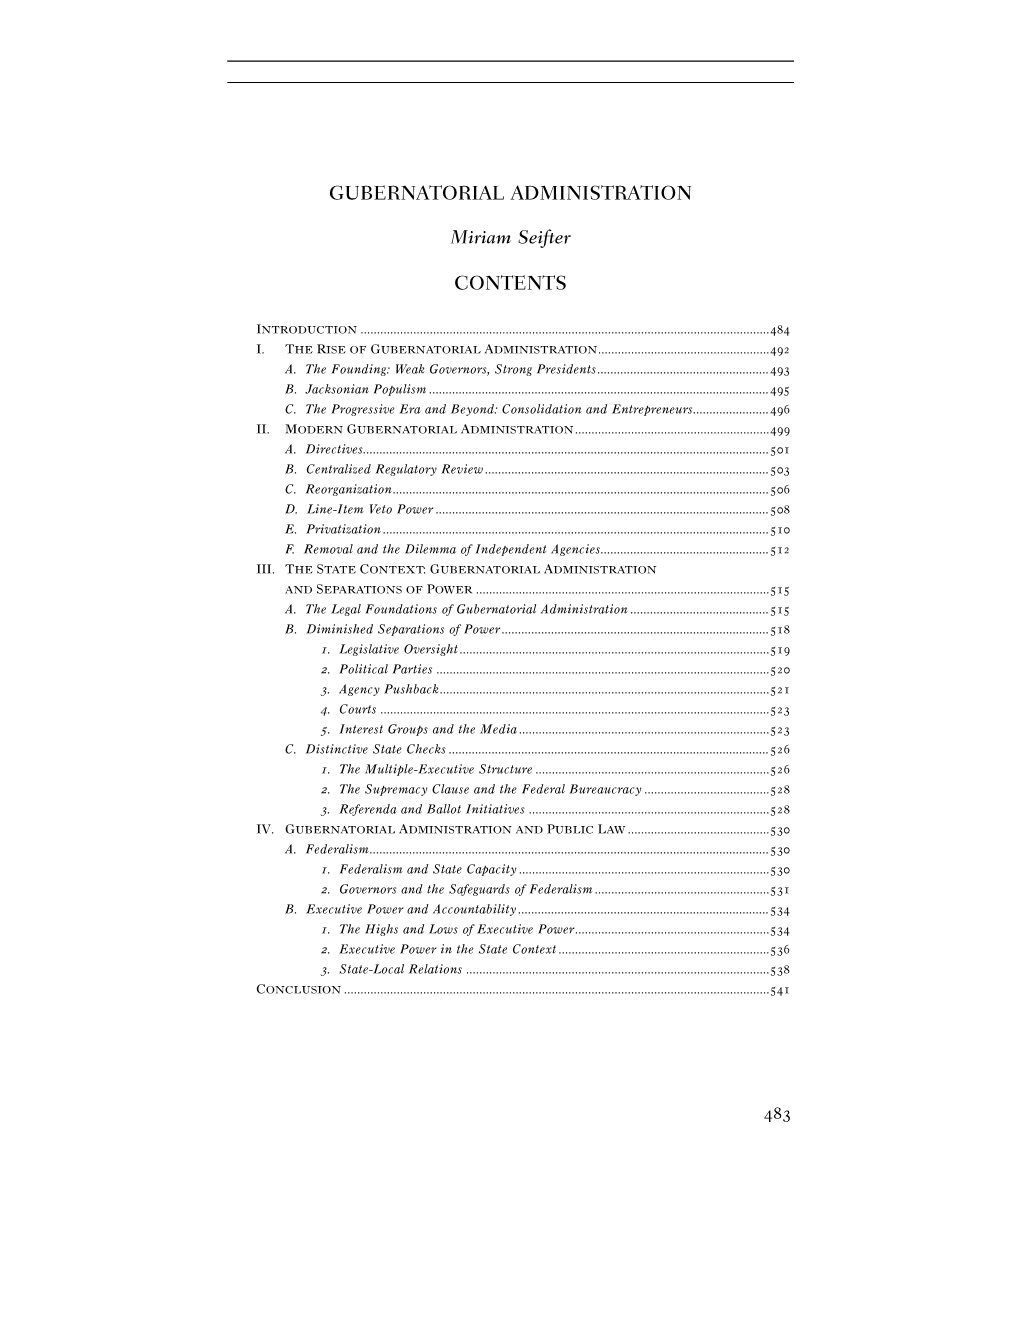 Gubernatorial Administration Contents